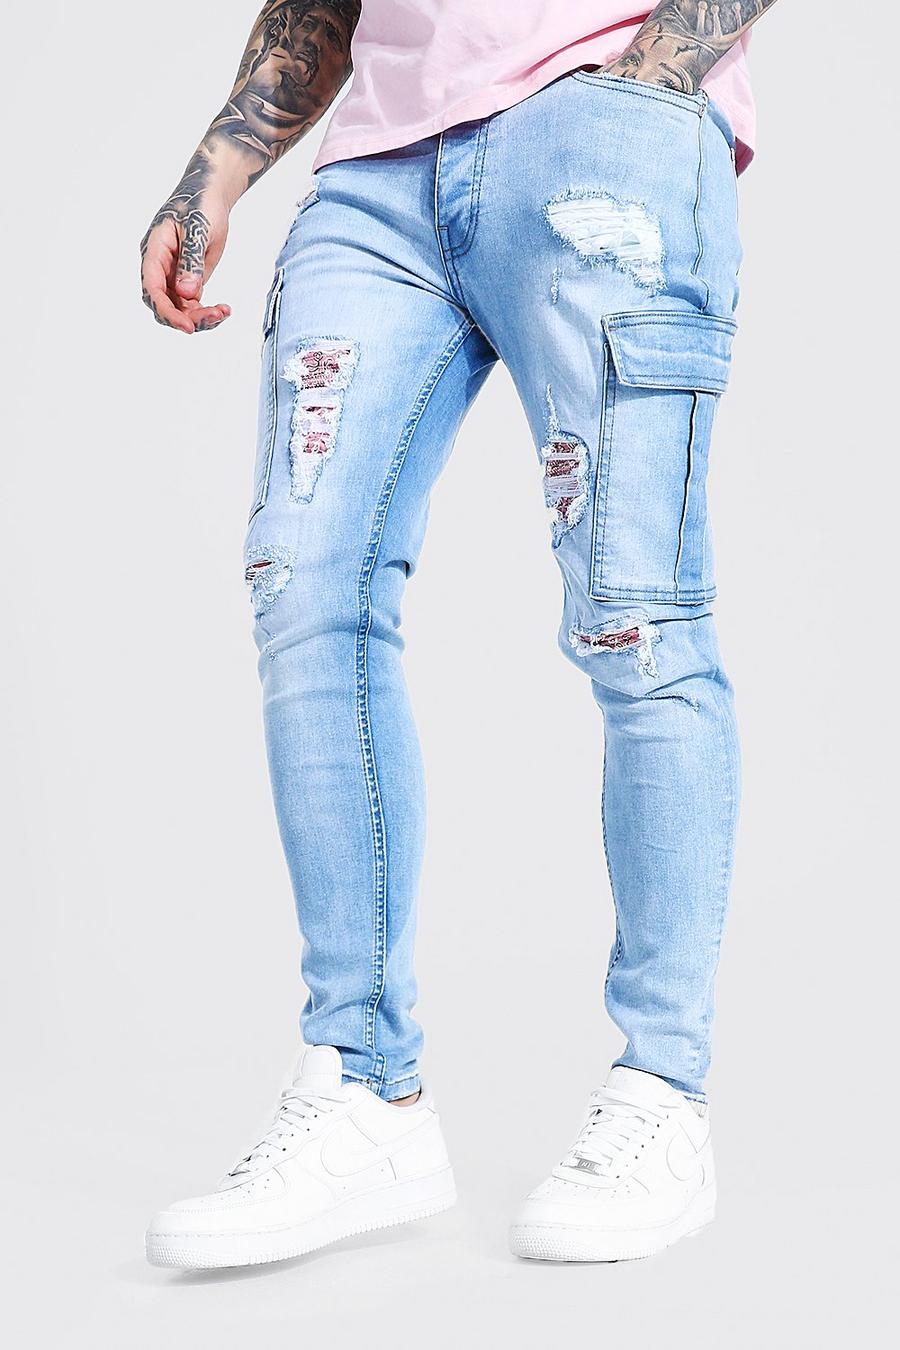 Adviicd Men's Ripped Stretch Jeans